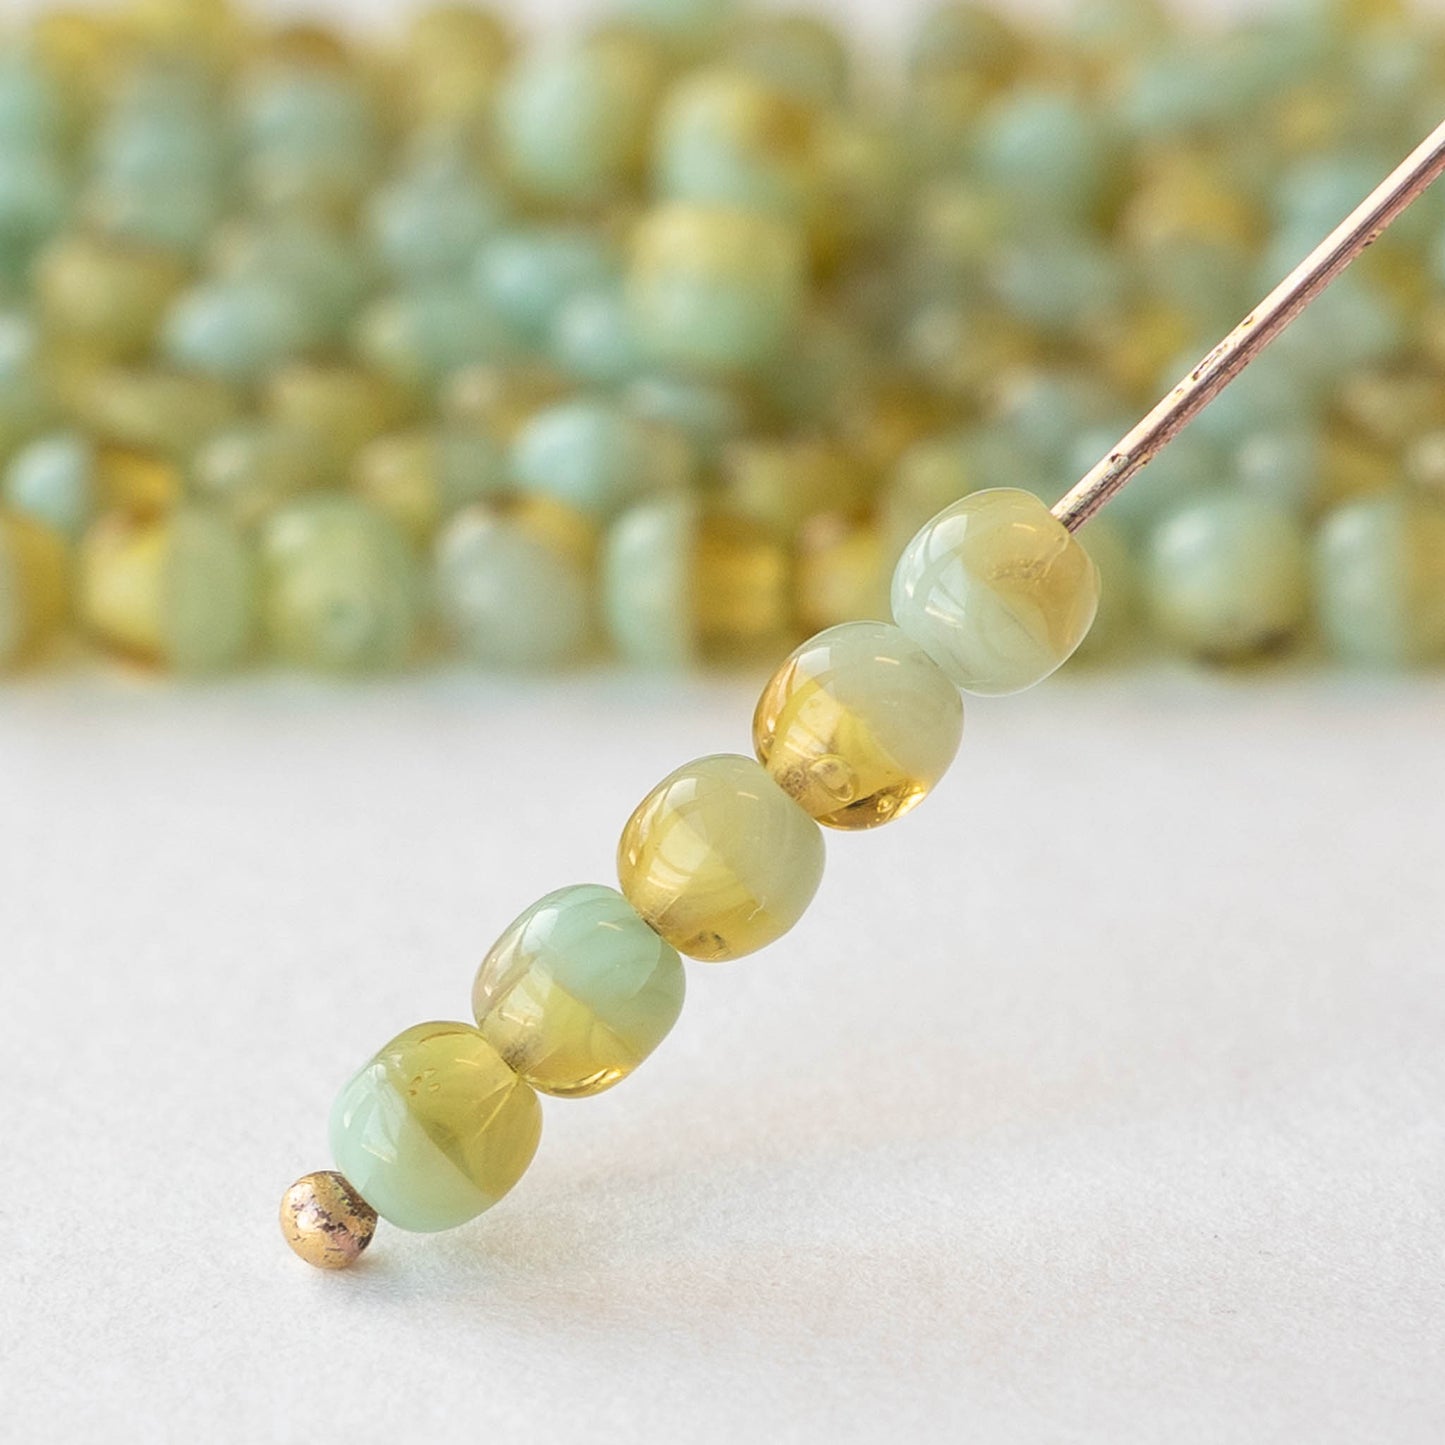 3mm Round Glass Beads - Light Green Amber Mix - 120 Beads